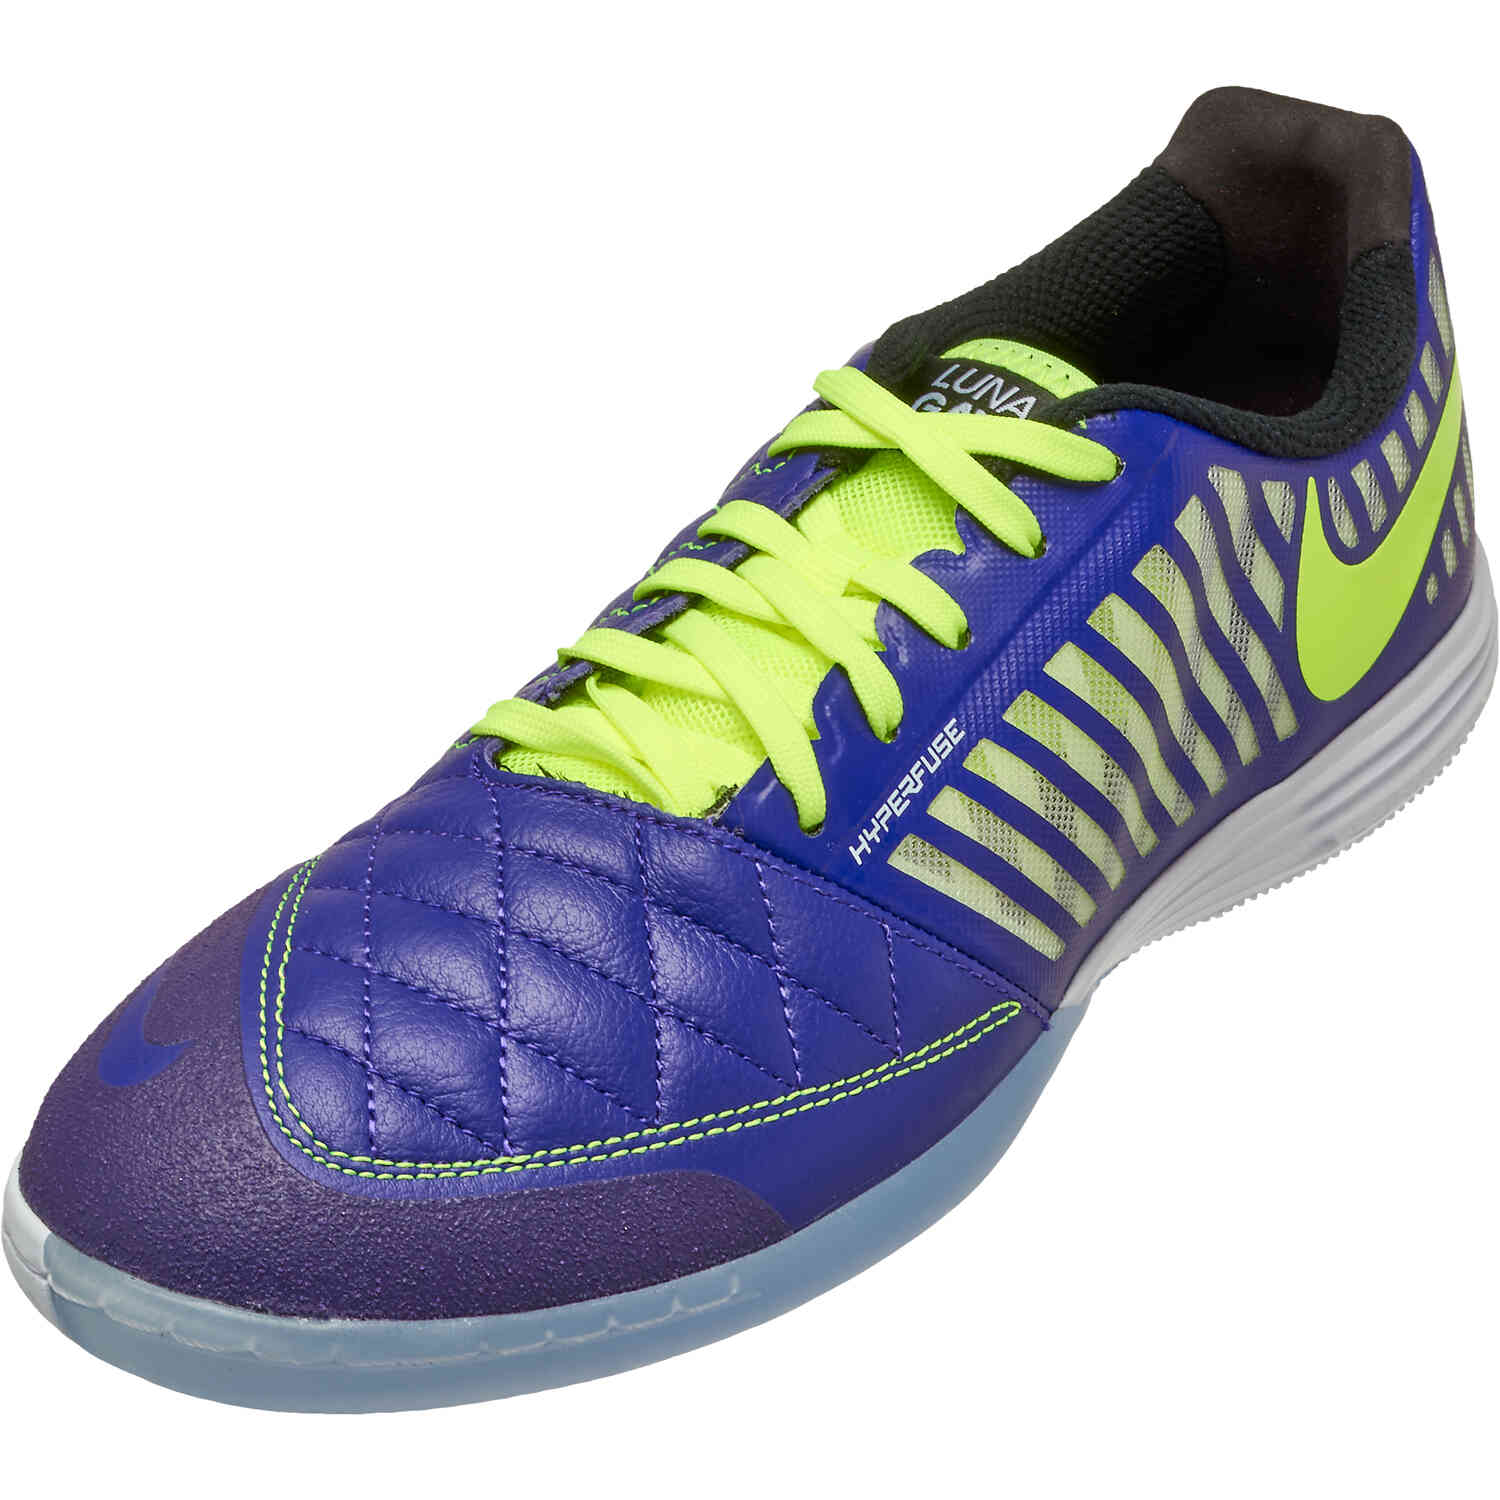 Noodlottig Bezwaar Afzonderlijk Nike Lunargato II IC - Electro Purple & Volt with Black with White -  SoccerPro